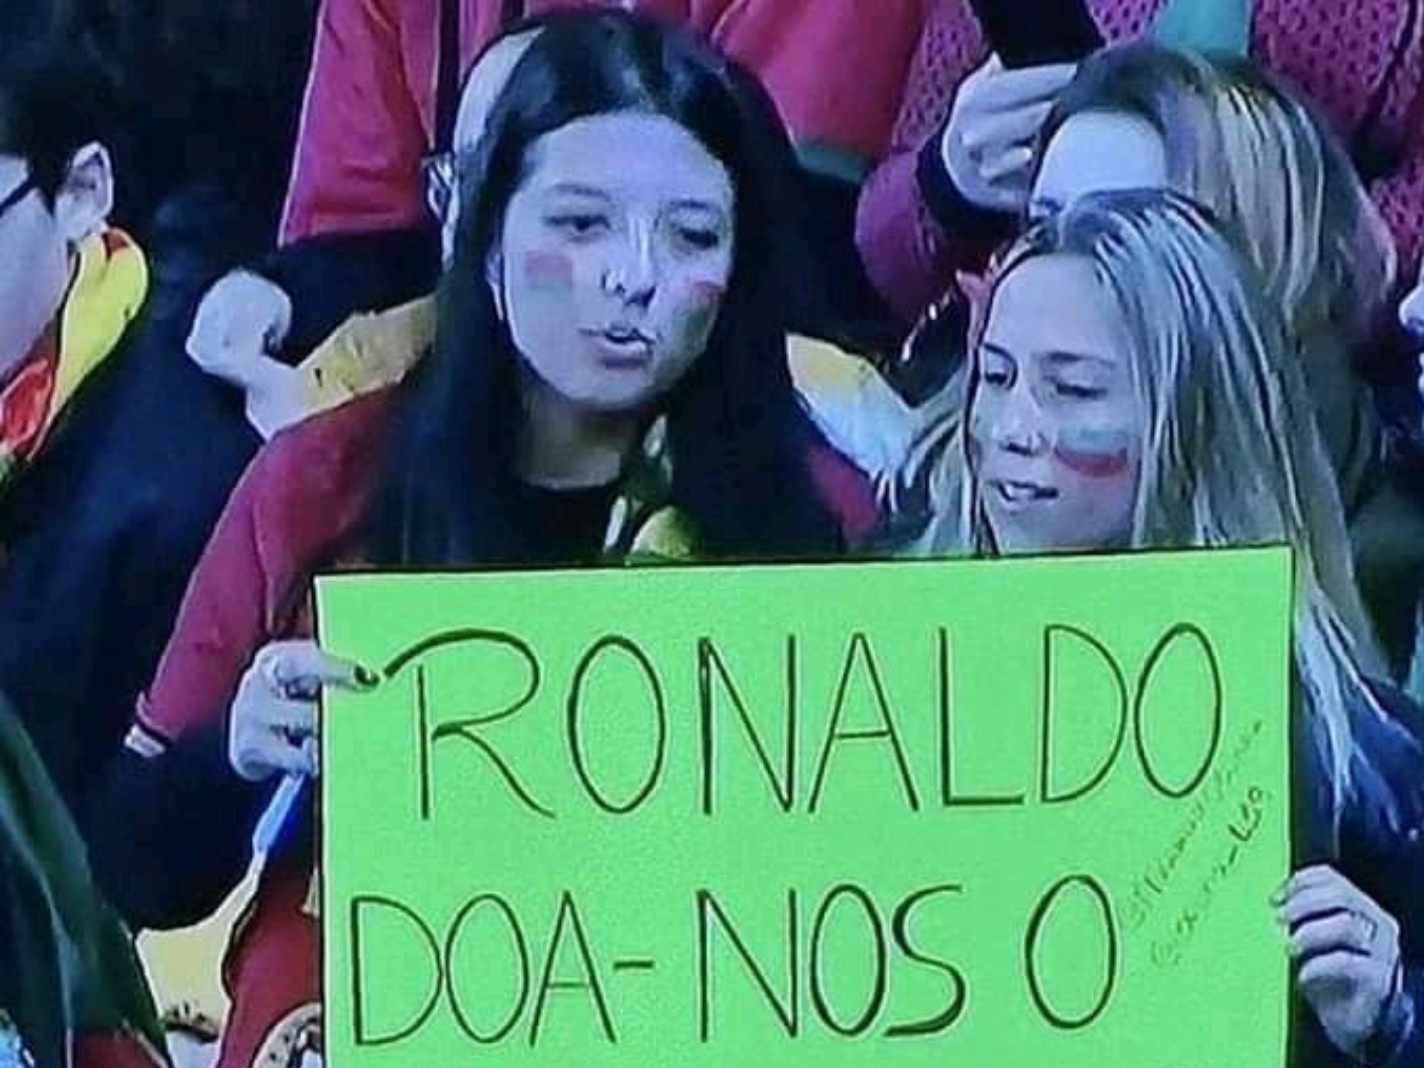 ‘Donate Us Your Sperm’: Cristiano Ronaldo fans make request in unusual banner